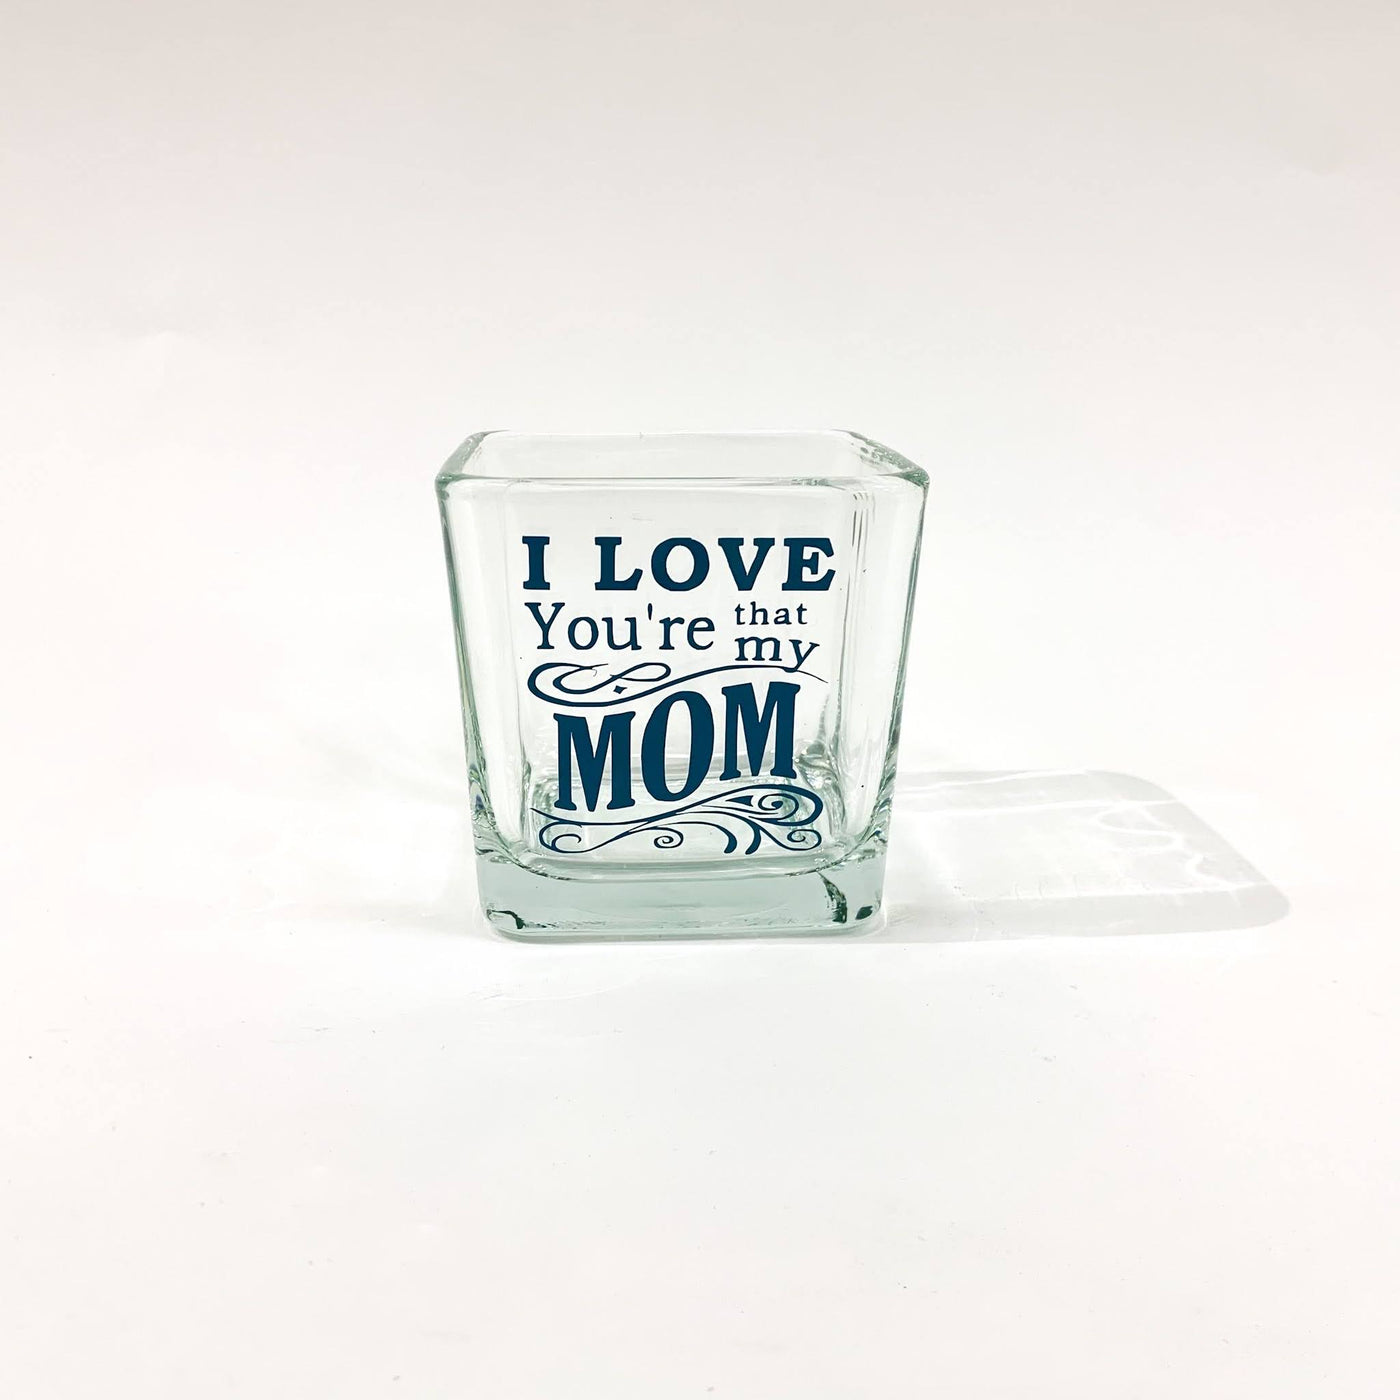 I love that your my Mom mini vase